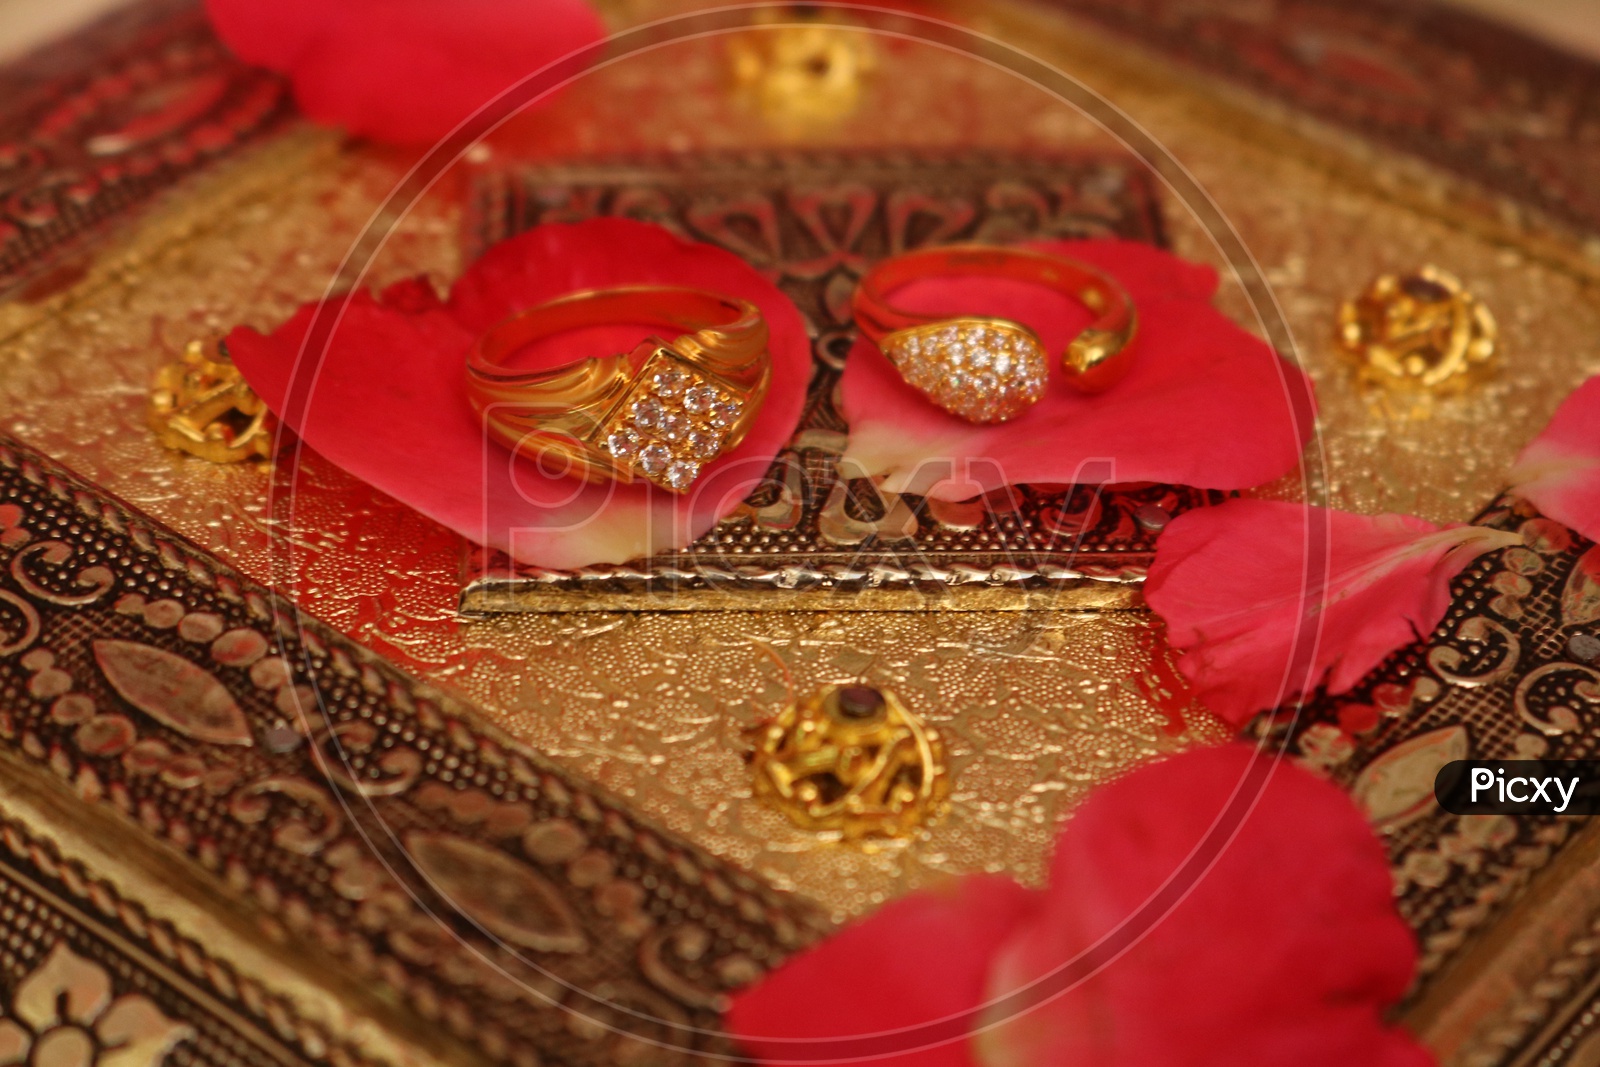 Nivi + Kousik | South Indian Wedding Livermore Hindu Temple | Wedding  Documentary Blog